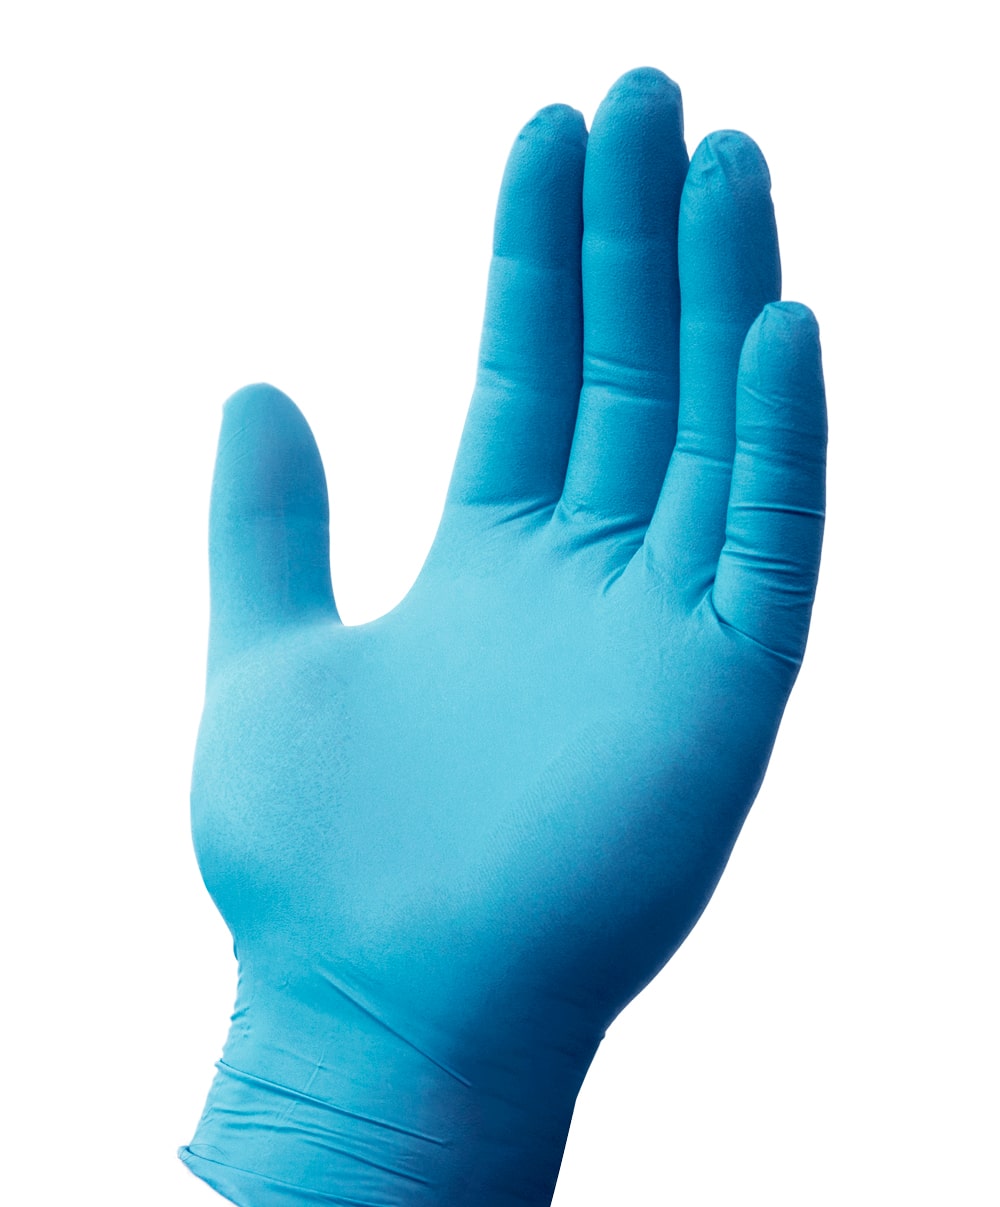 GNPR-LG-1A N2203 3Mil 
Light-Weight Blue Powder Free 
Nitrile Glove 100/Bx 10Bx/Cs